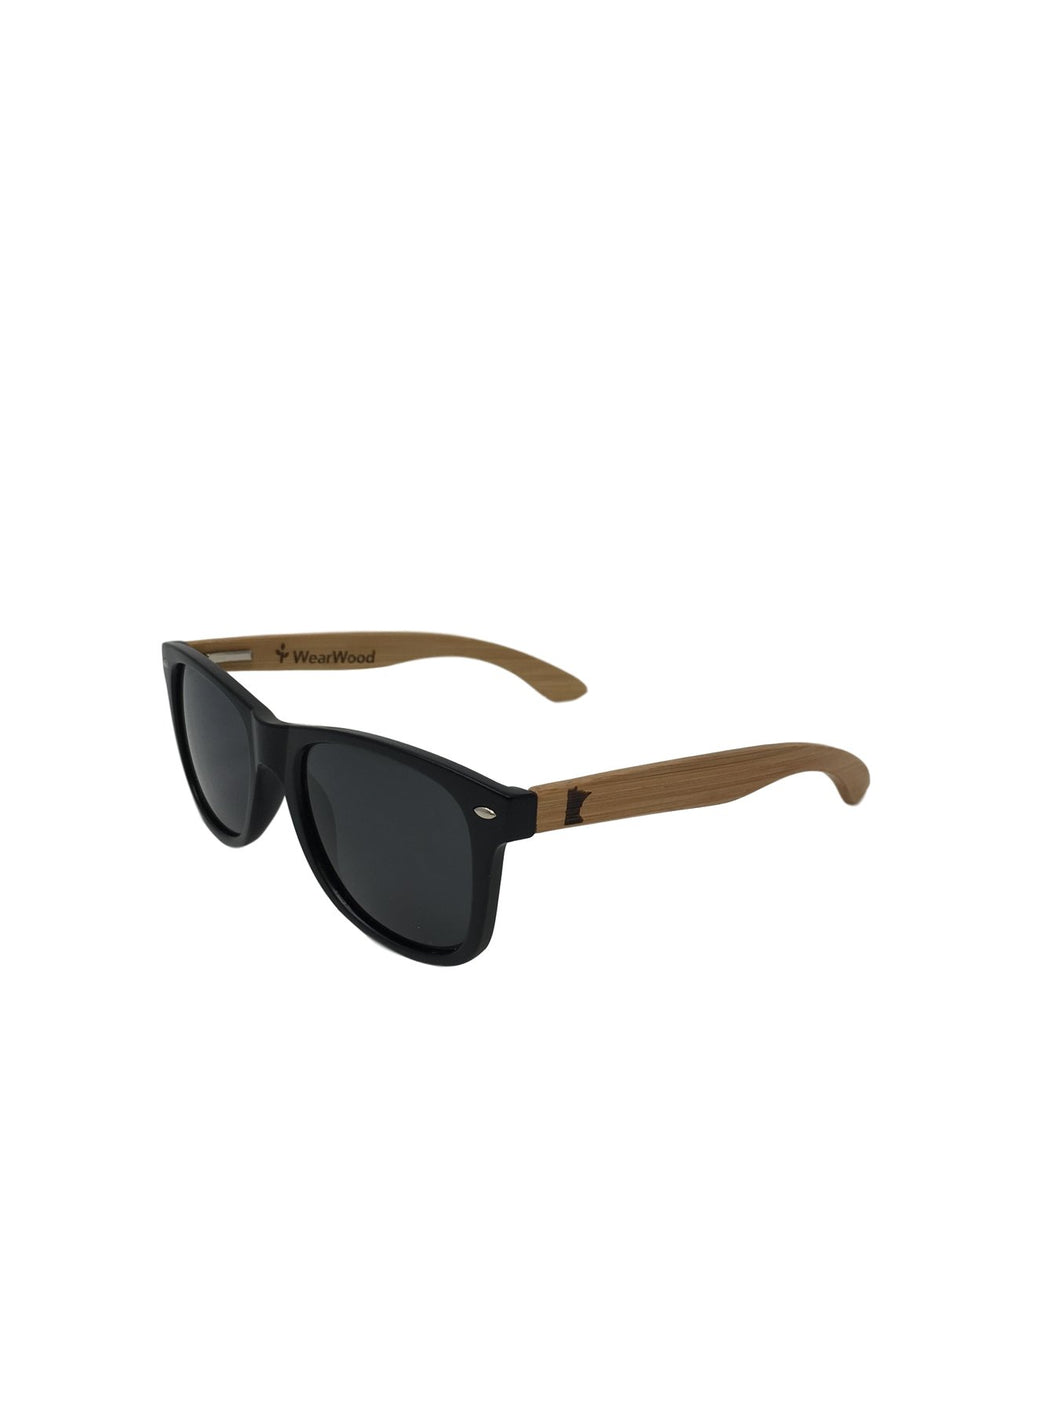 Wearwood MN Classic Bamboo Sunglasses